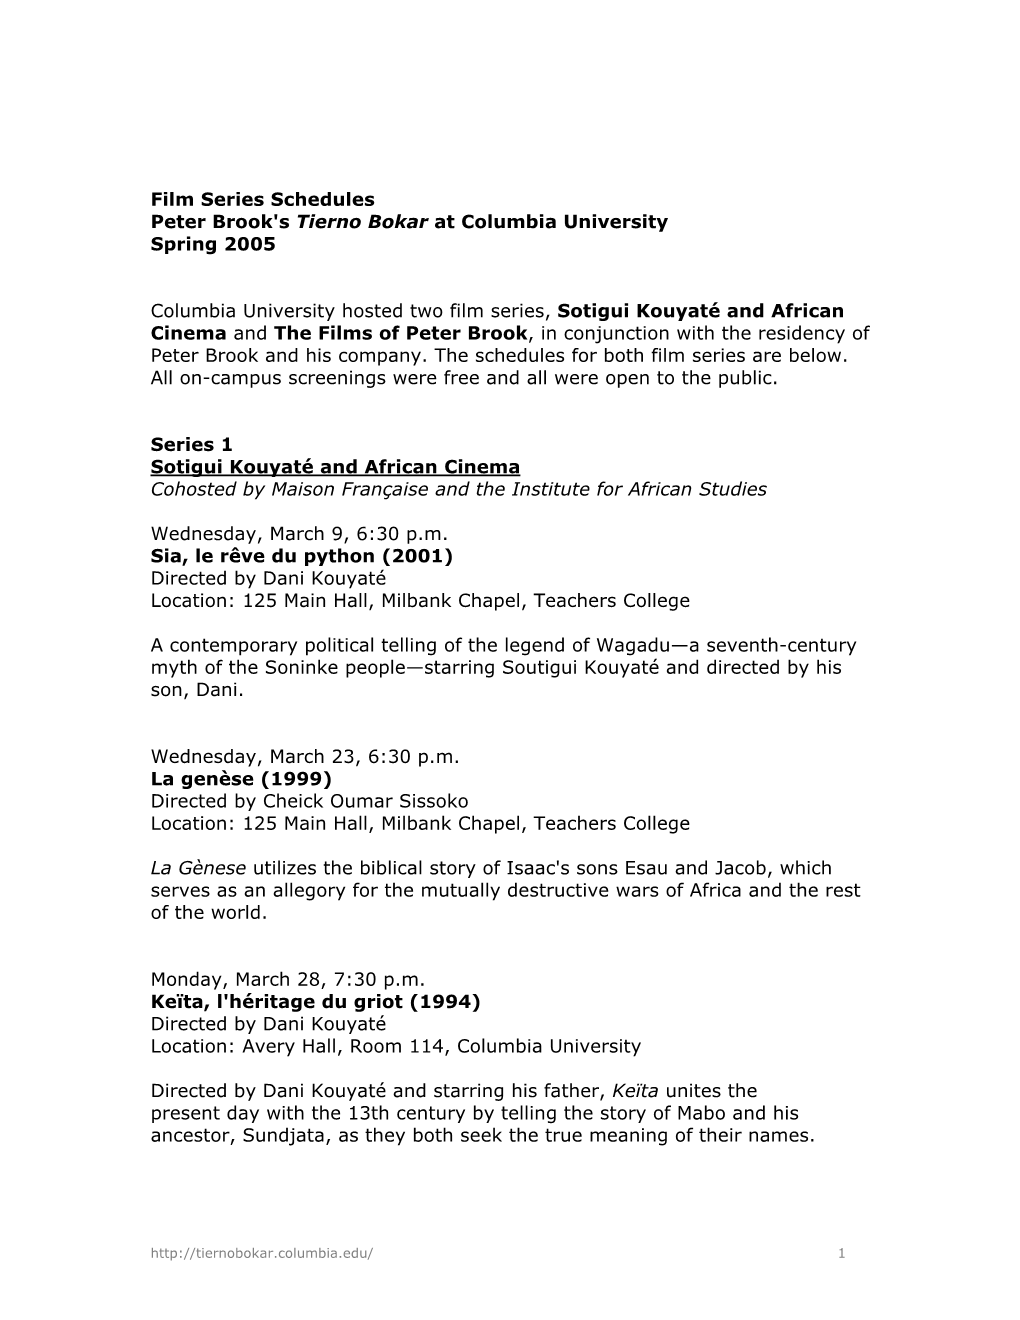 Film Series Schedules Peter Brook's Tierno Bokar at Columbia University Spring 2005